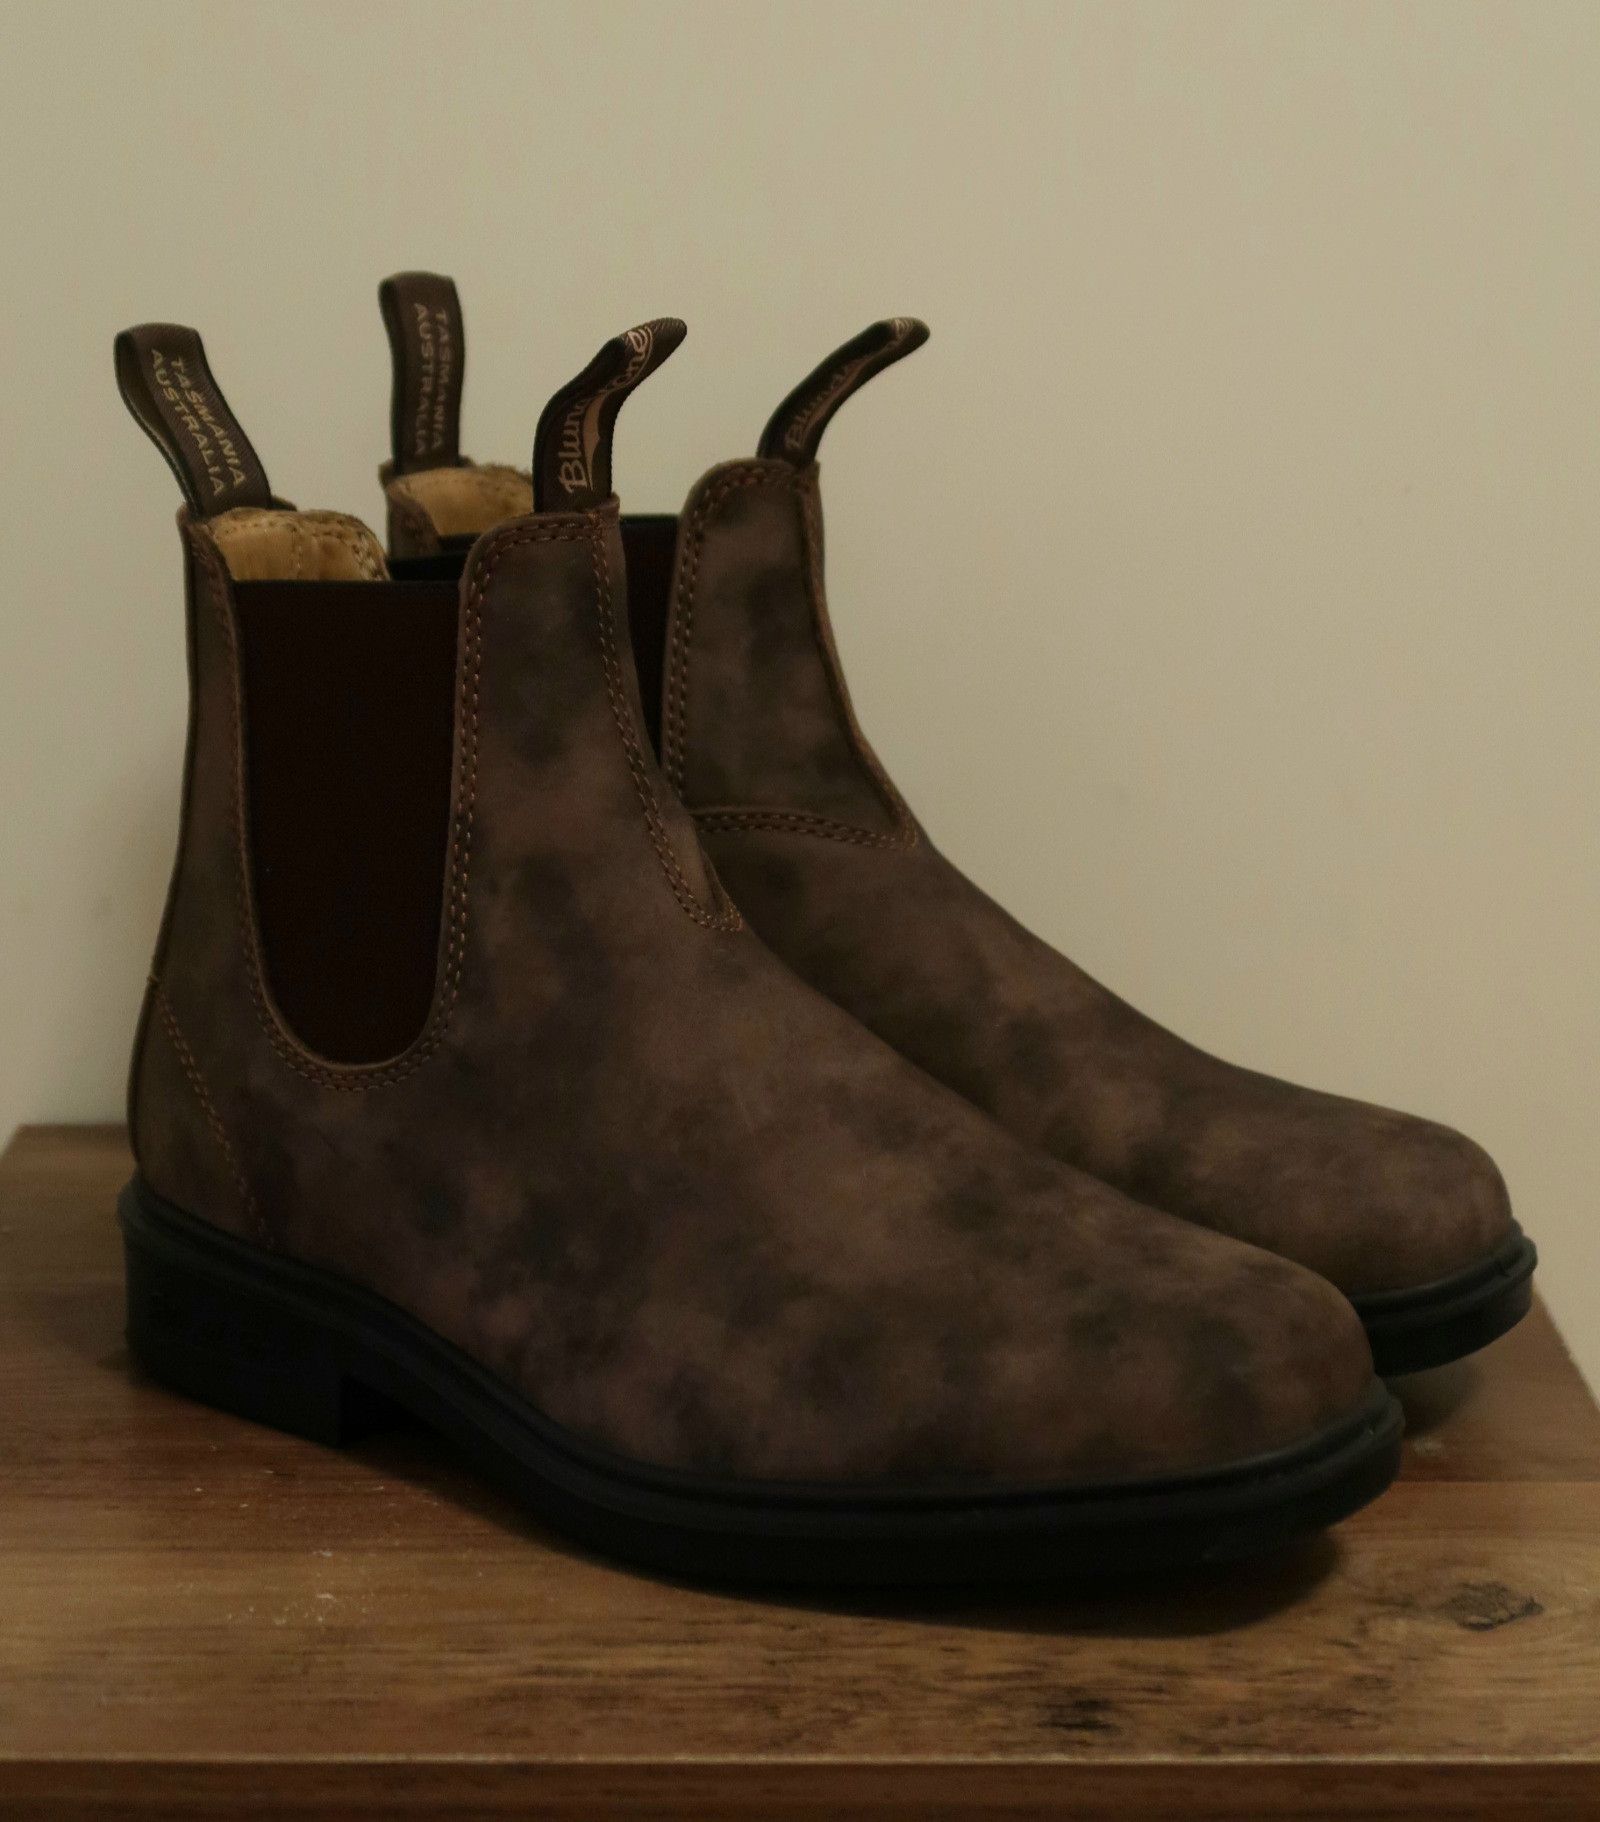 Blundstone David Beckham - Blundstone 1306 chelsea boots | Grailed